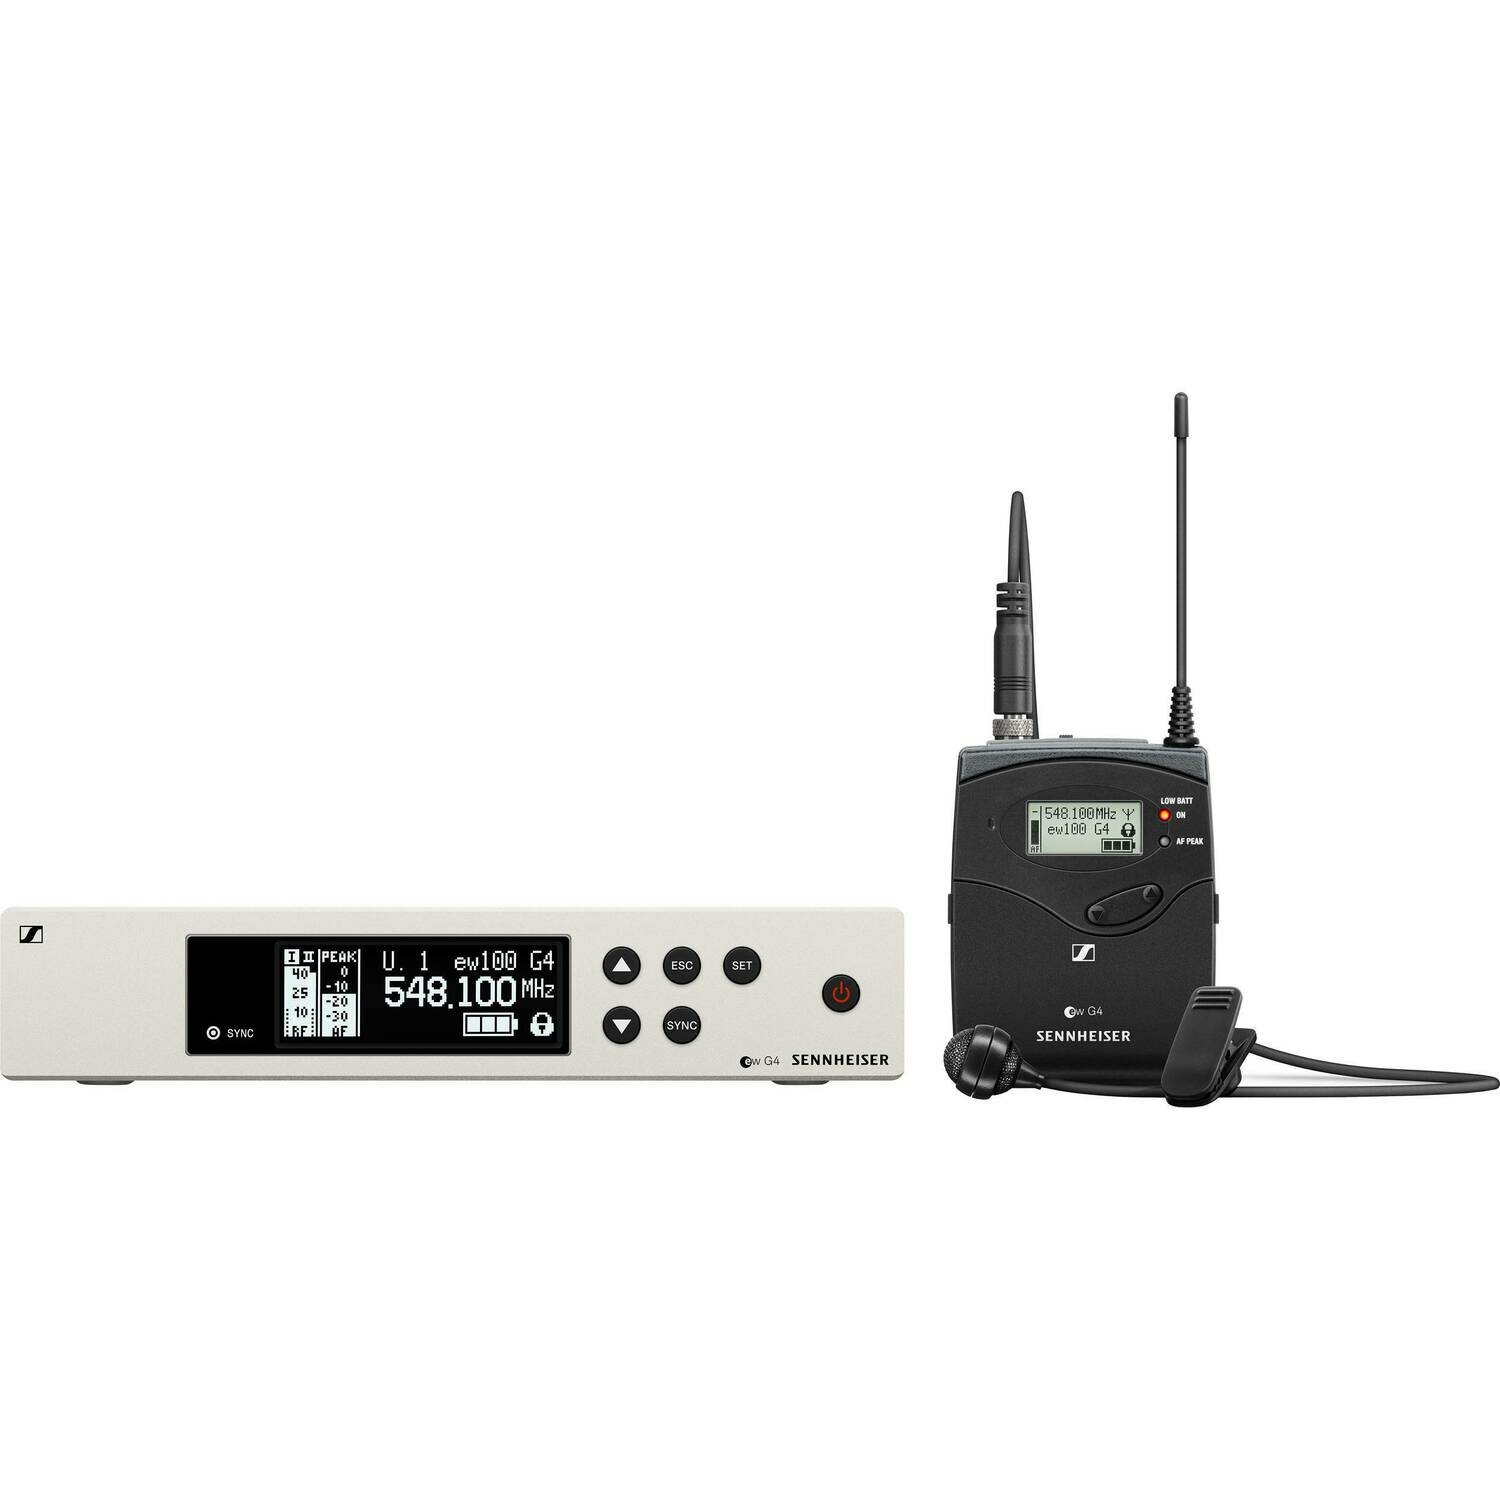 Sennheiser EW 100 G4-ME2 Wireless Omni Lavalier Microphone System (A1: 470 to 516 MHz)
#SEEW100G4MA1 MFR #EW 100 G4-ME2-A1